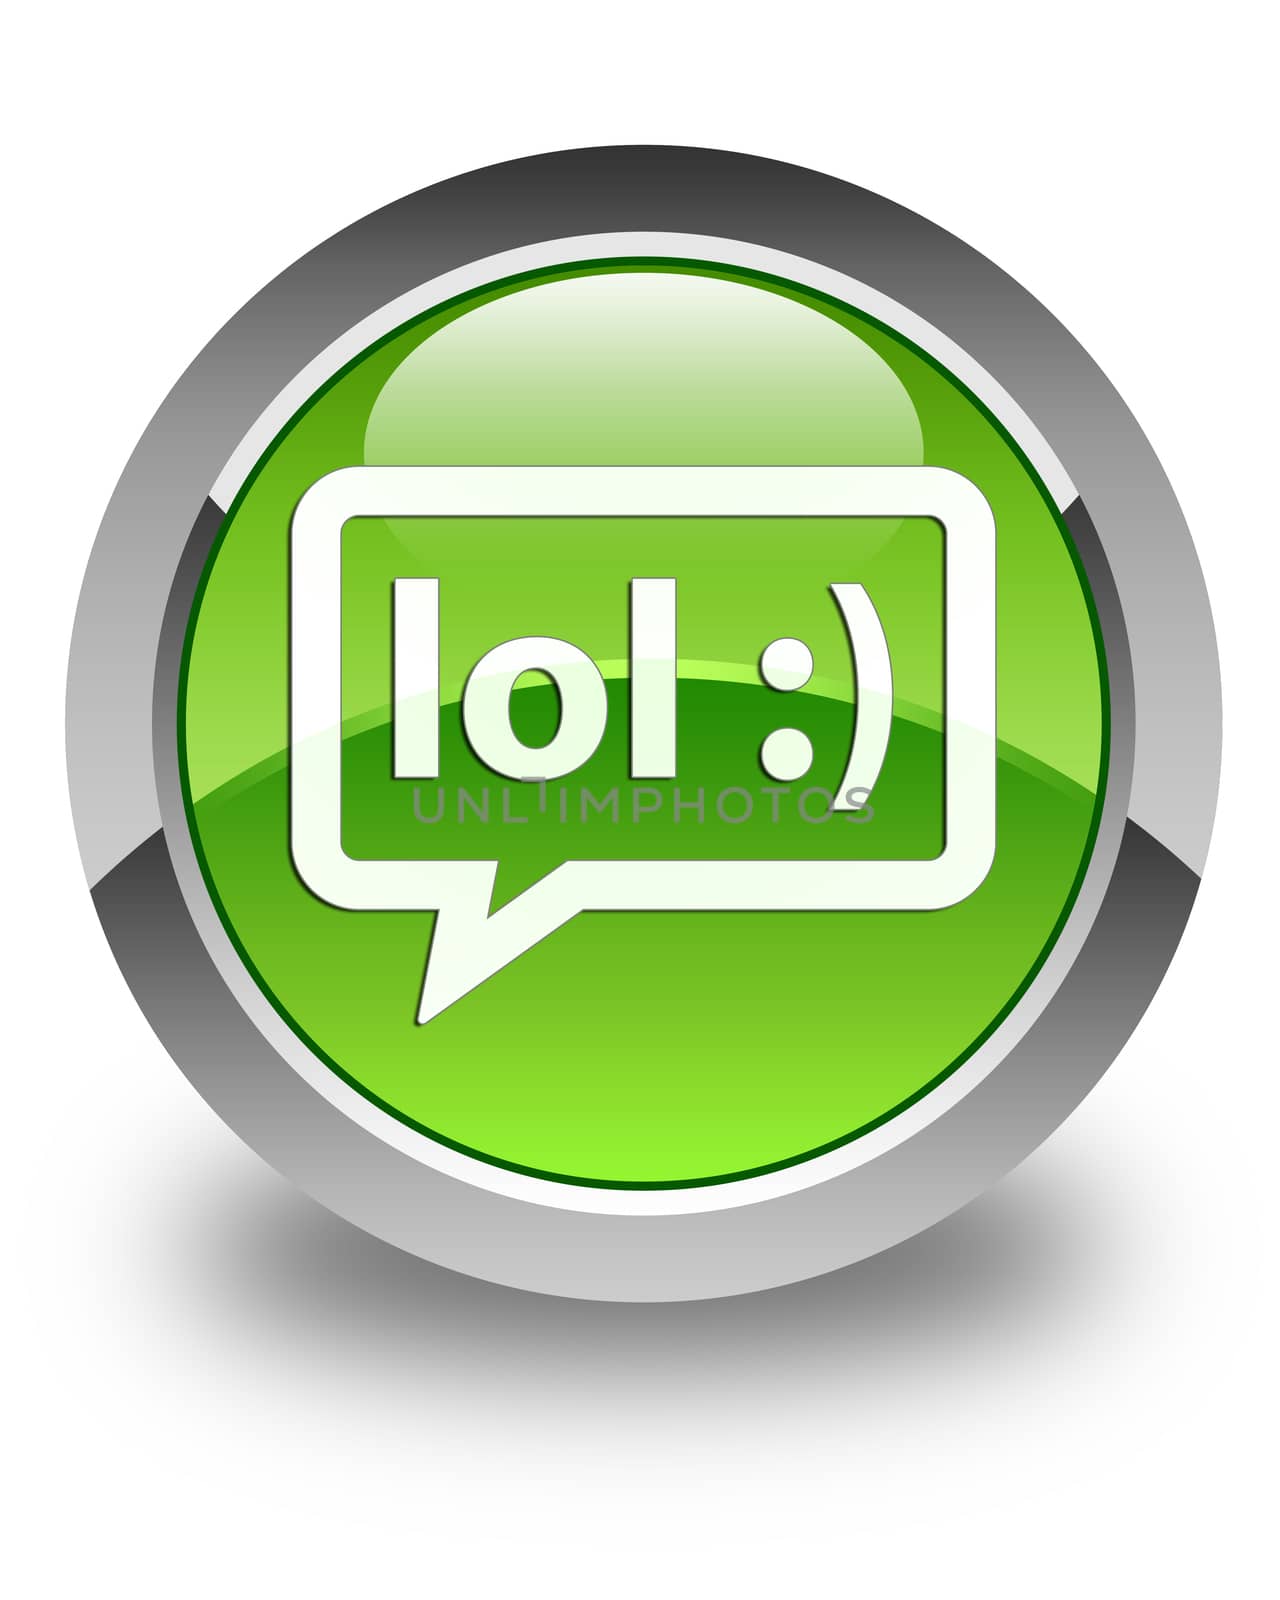 Lol bubble chat icon glossy green round button by faysalfarhan